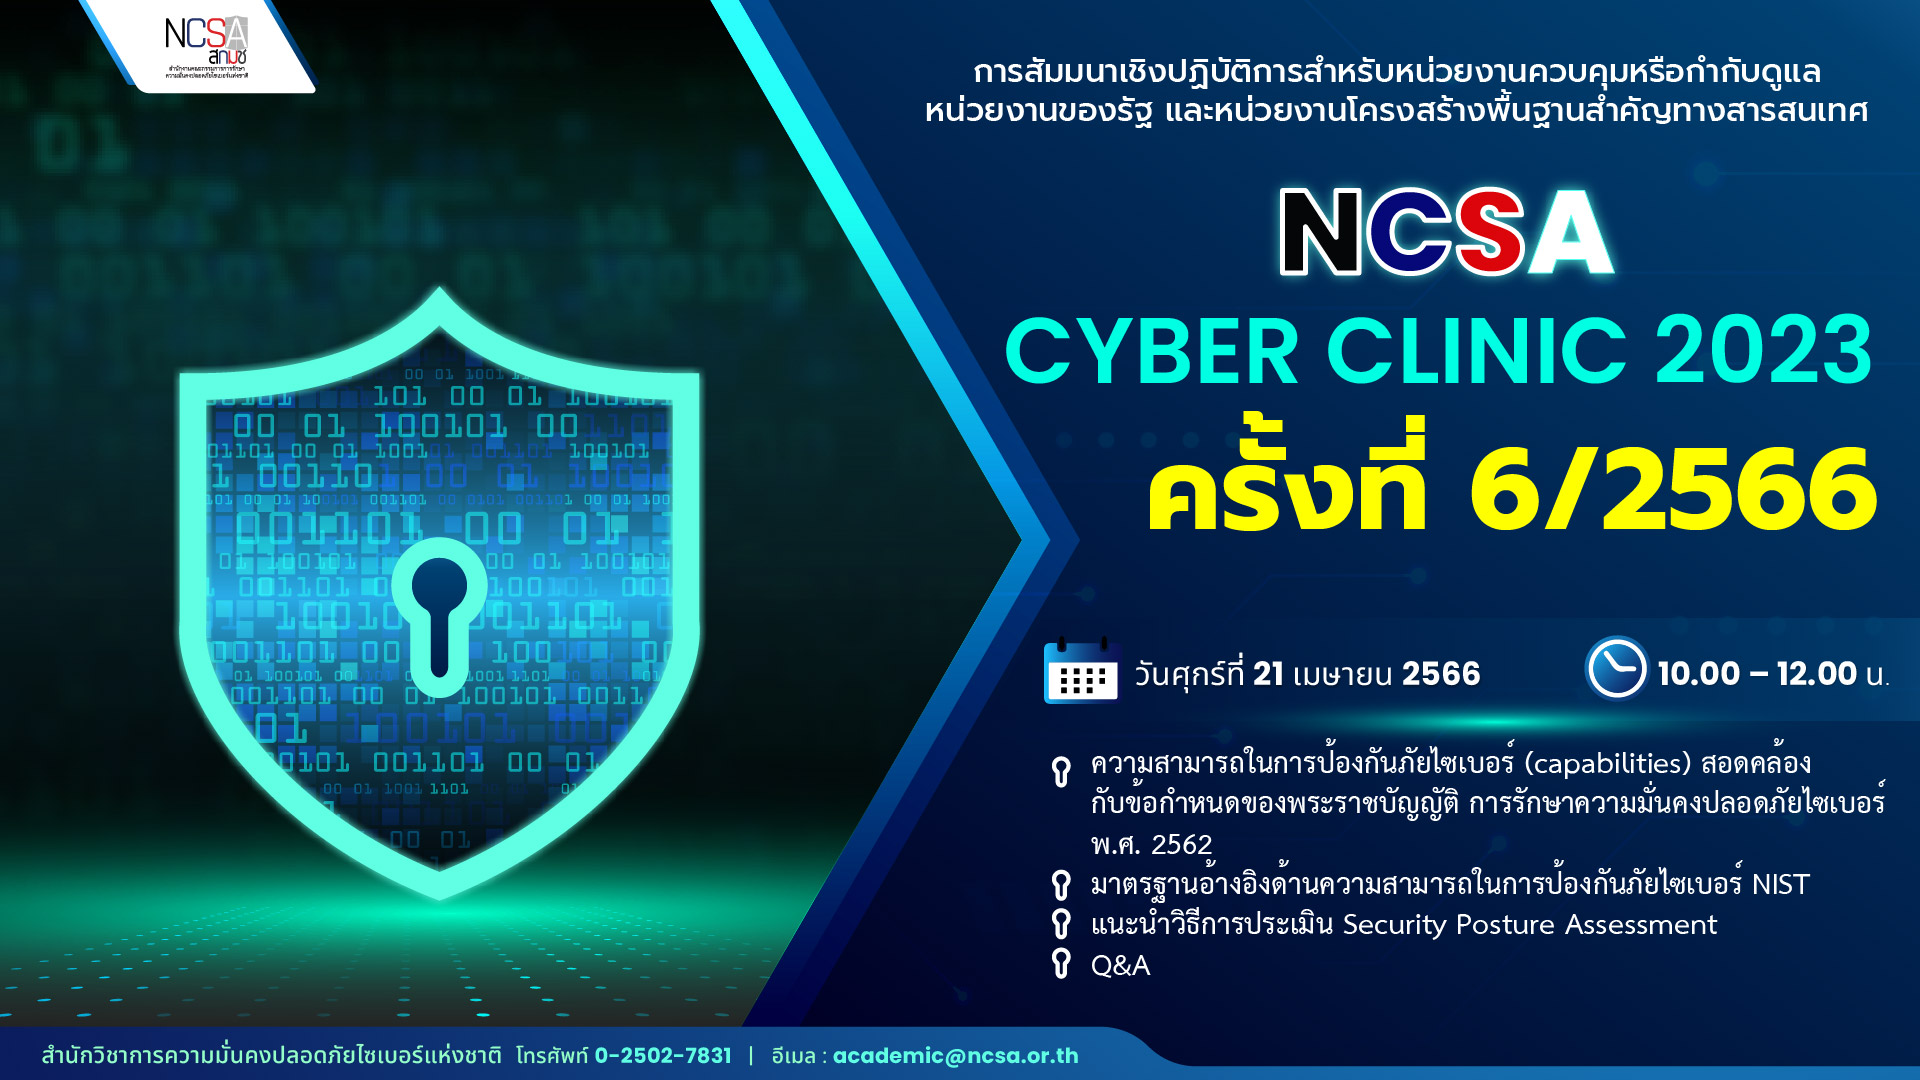 NCSA Cyber Clinic 2023 ครั้งที่ 6/2566